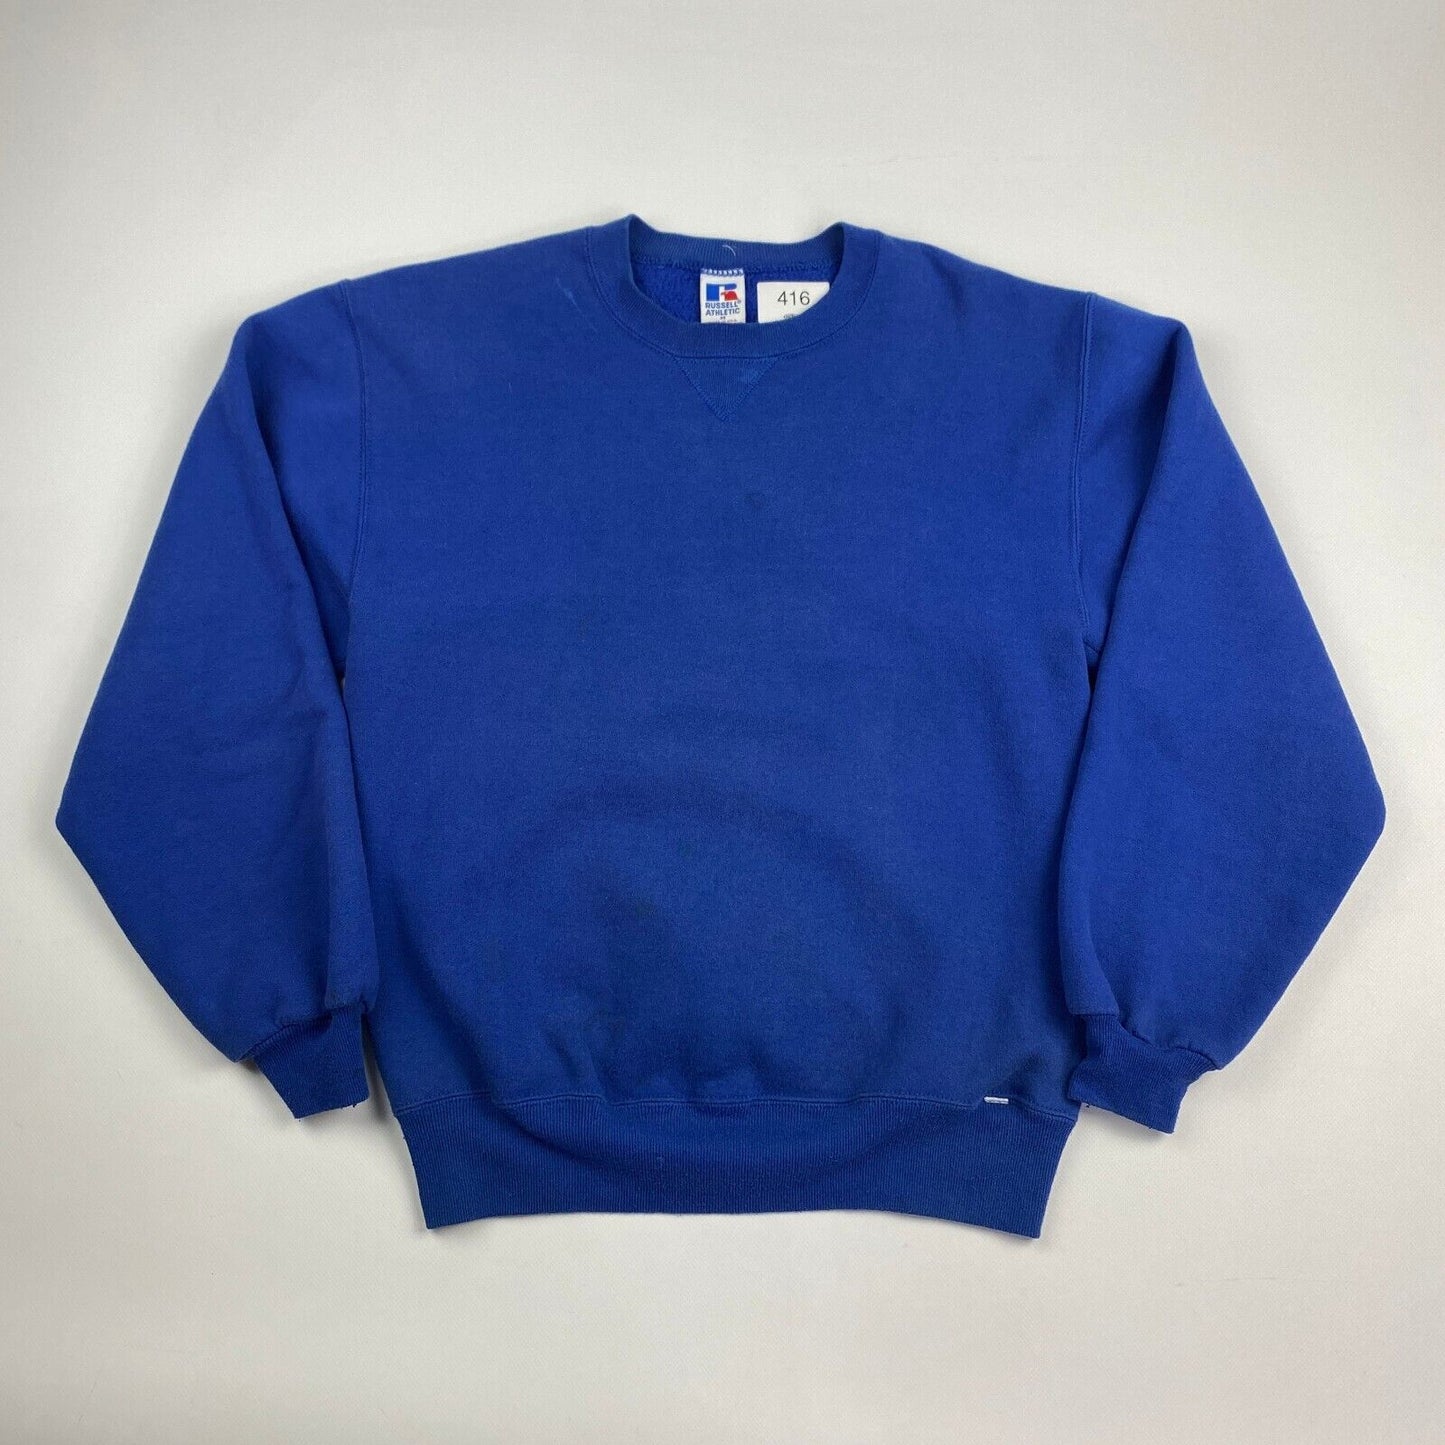 VINTAGE 90s Russell Athletic Blank Blue Crewneck Sweater sz Medium Men MadeinUSA